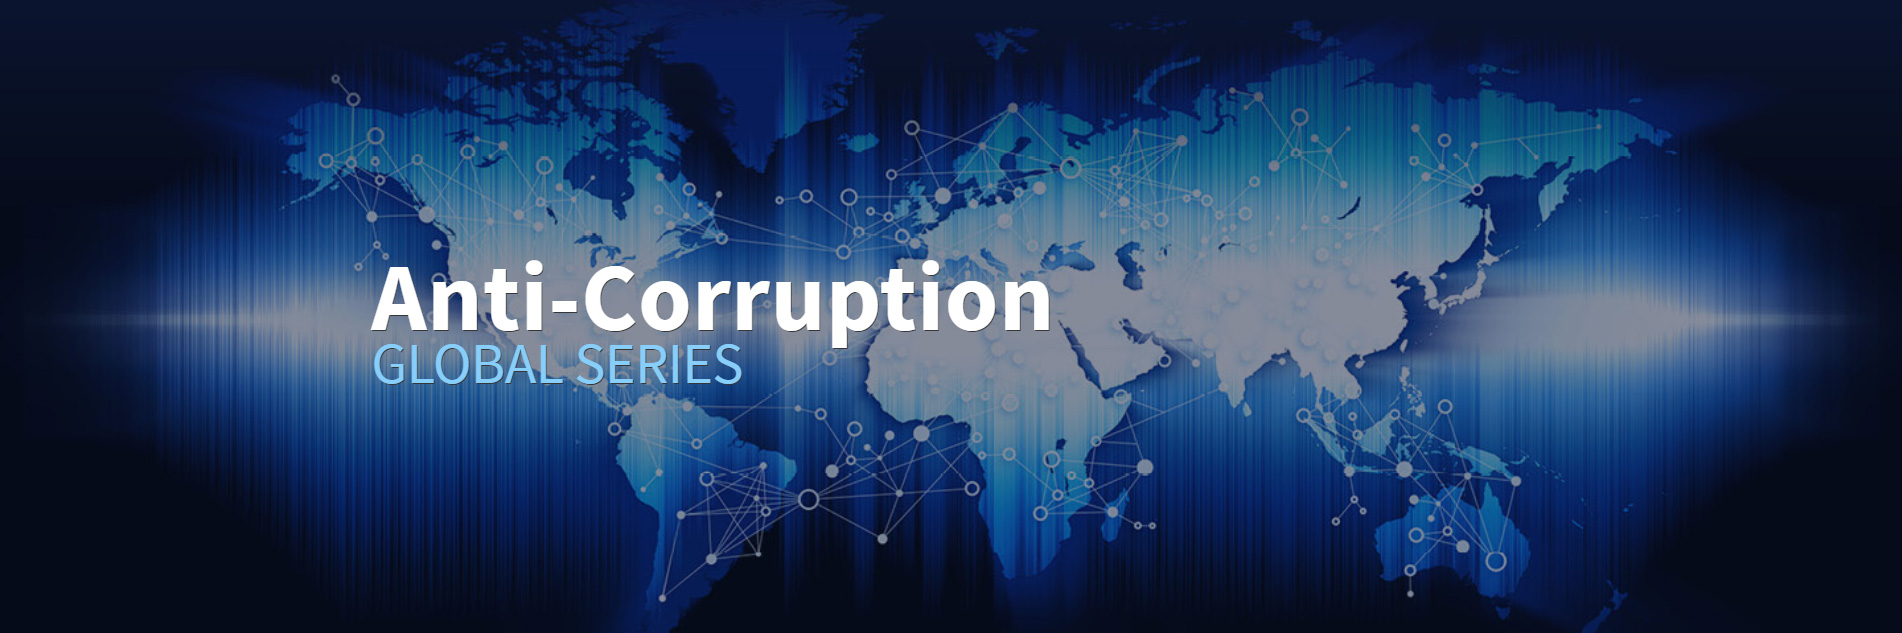 Anti-Corruption Global Series